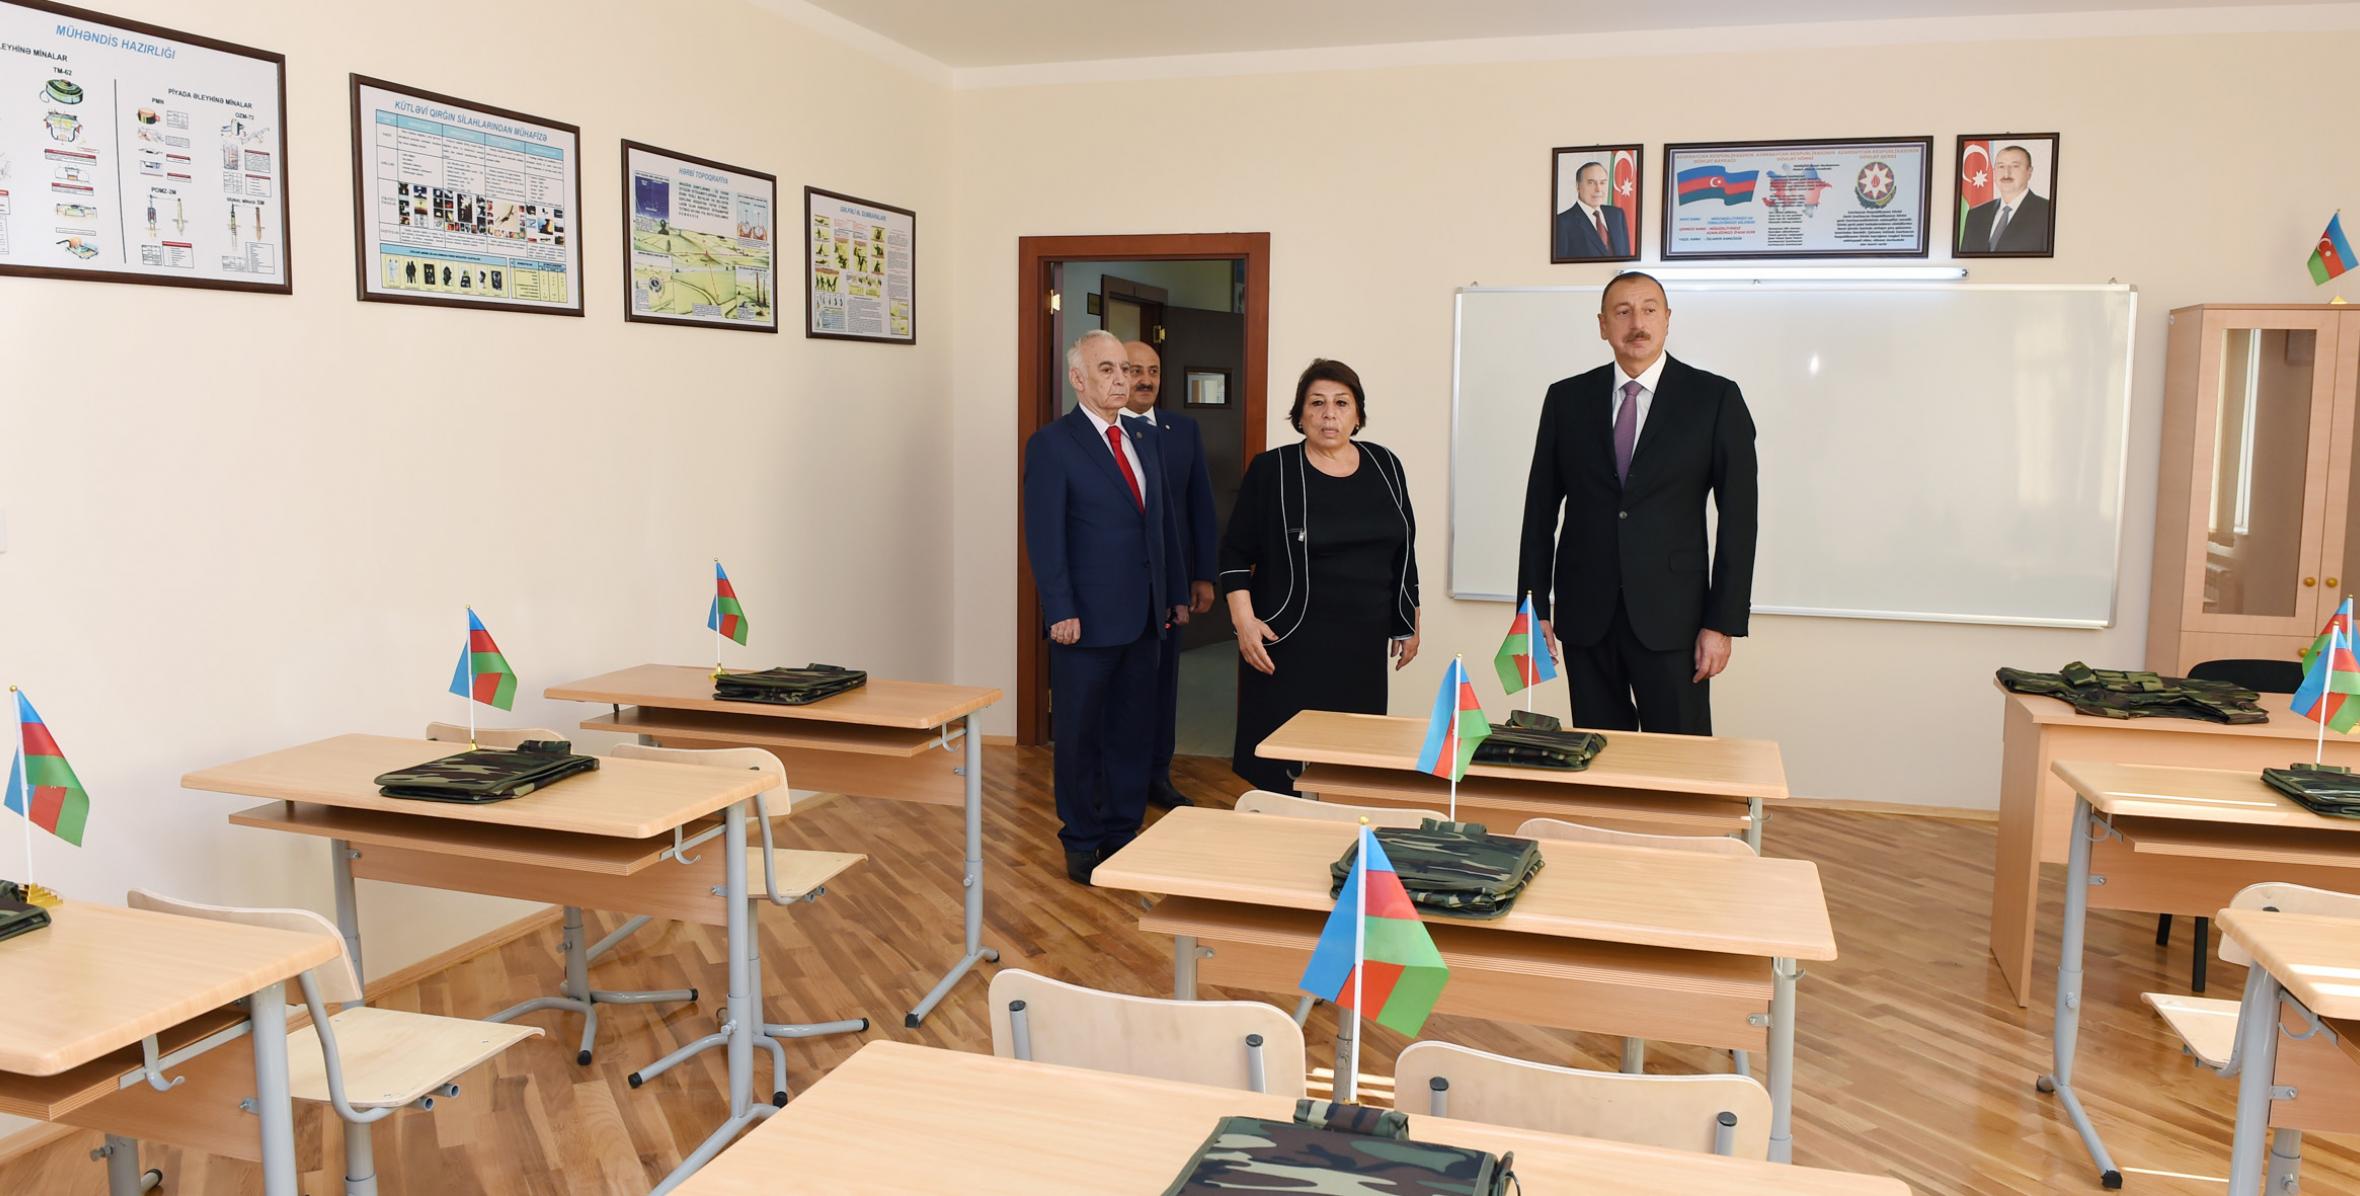 Ilham Aliyev viewed School No. 247 in Nasimi District after major overhaul